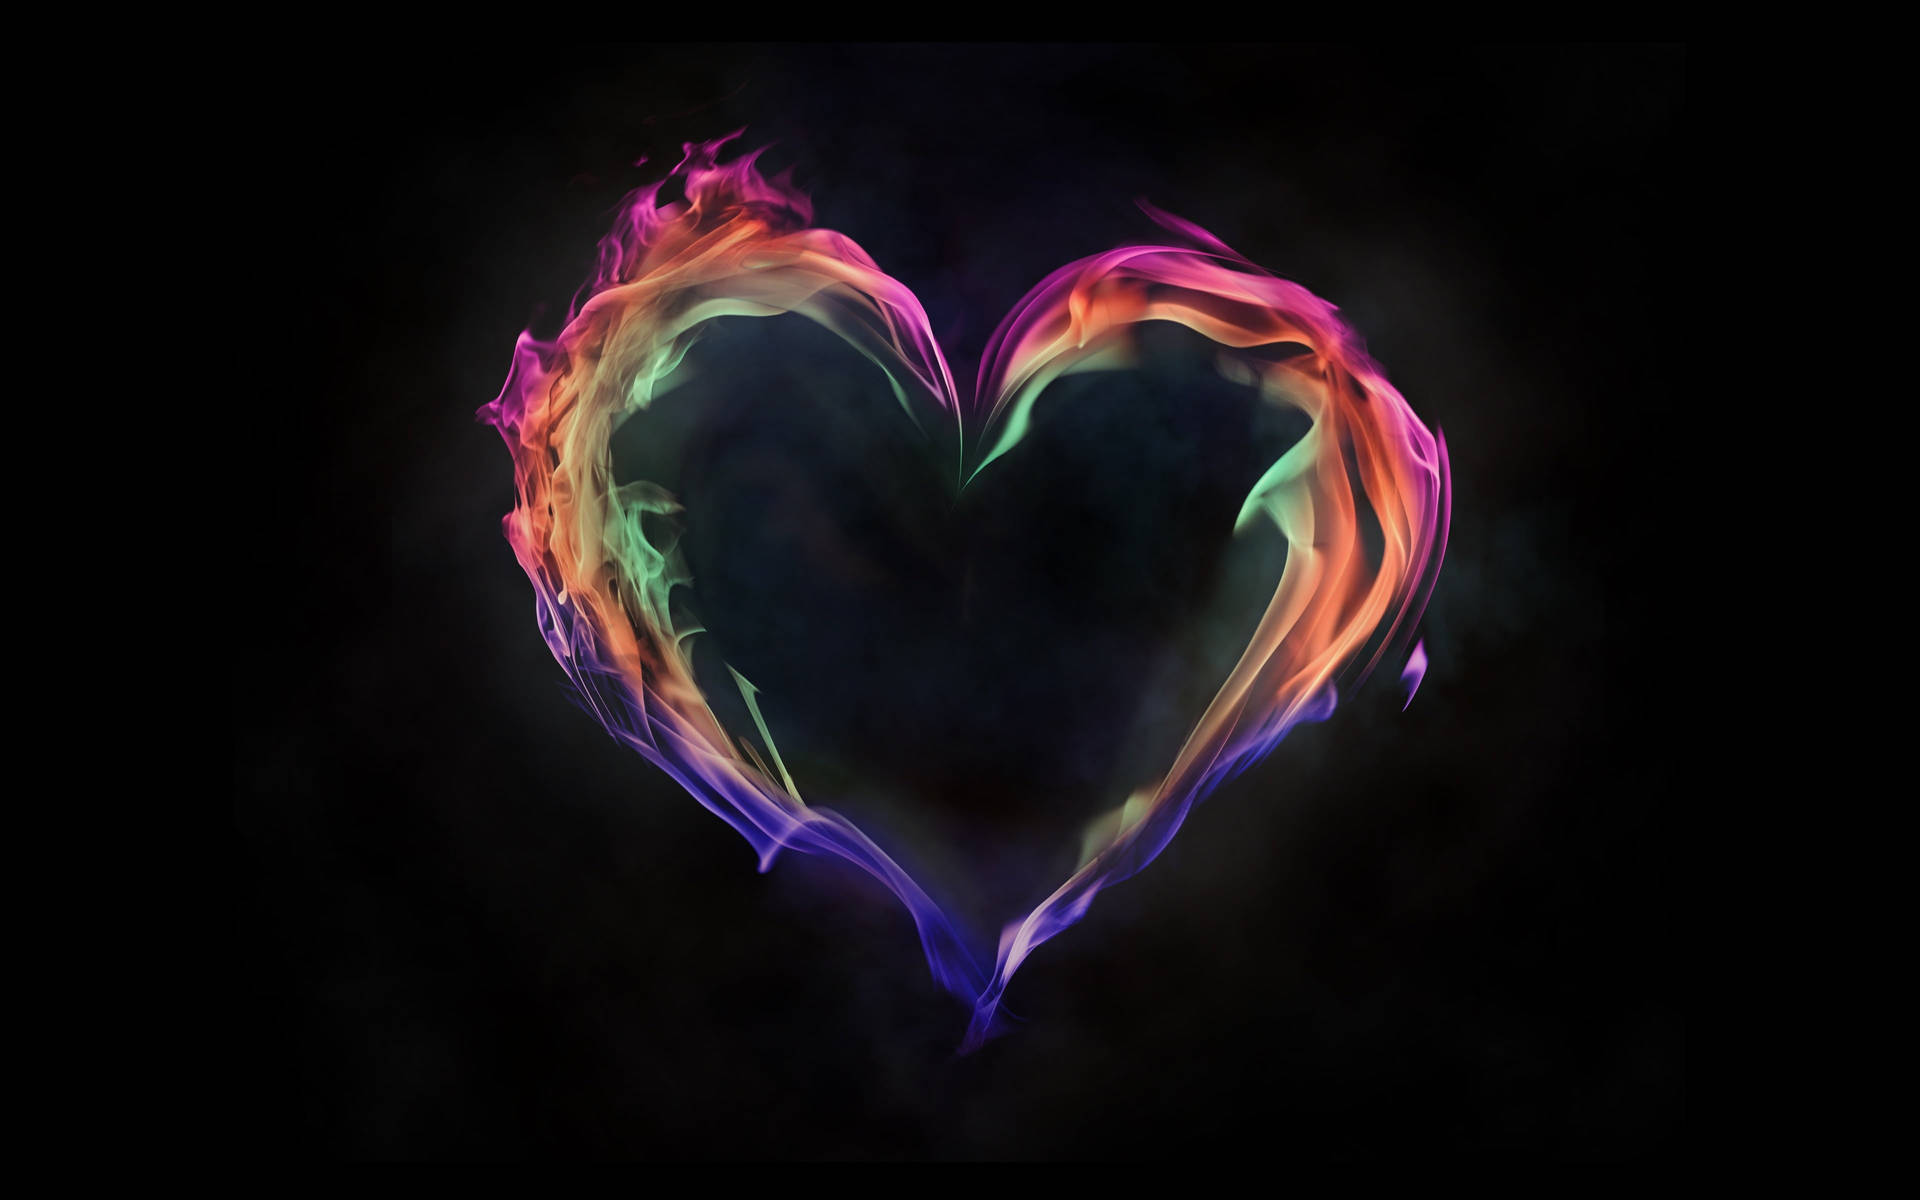 Creative Colorful Flaming Heart Wallpaper